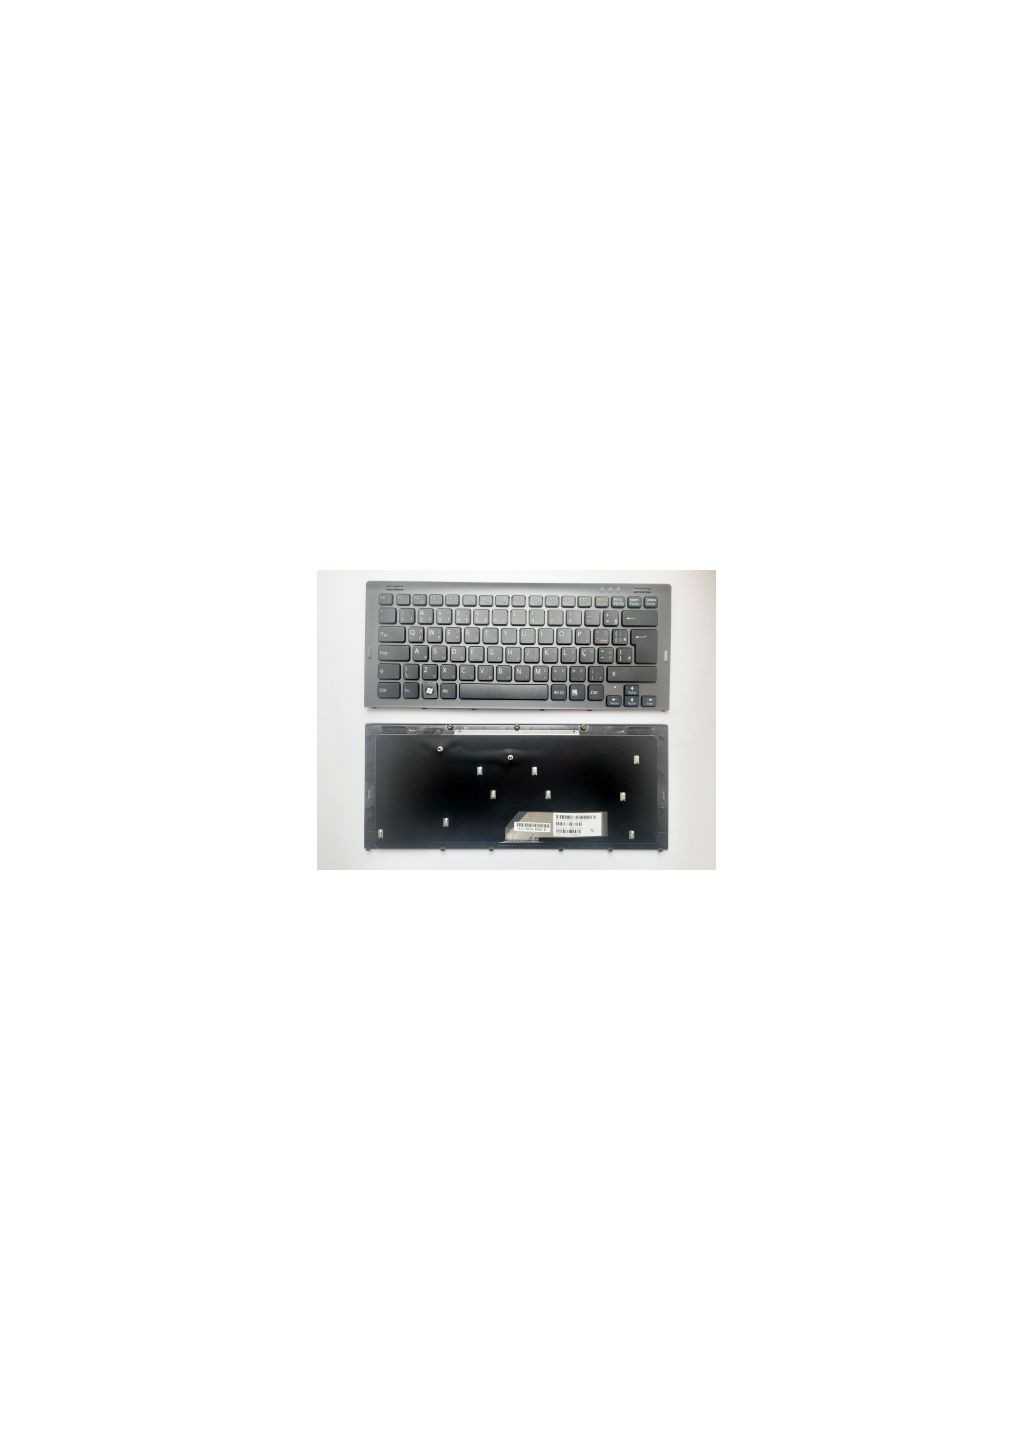 Клавиатура ноутбука VGNSR series черная с темно-серой рамкой UA (A43710) Sony vgn-sr series черная с темно-серой рамкой ua (276706393)